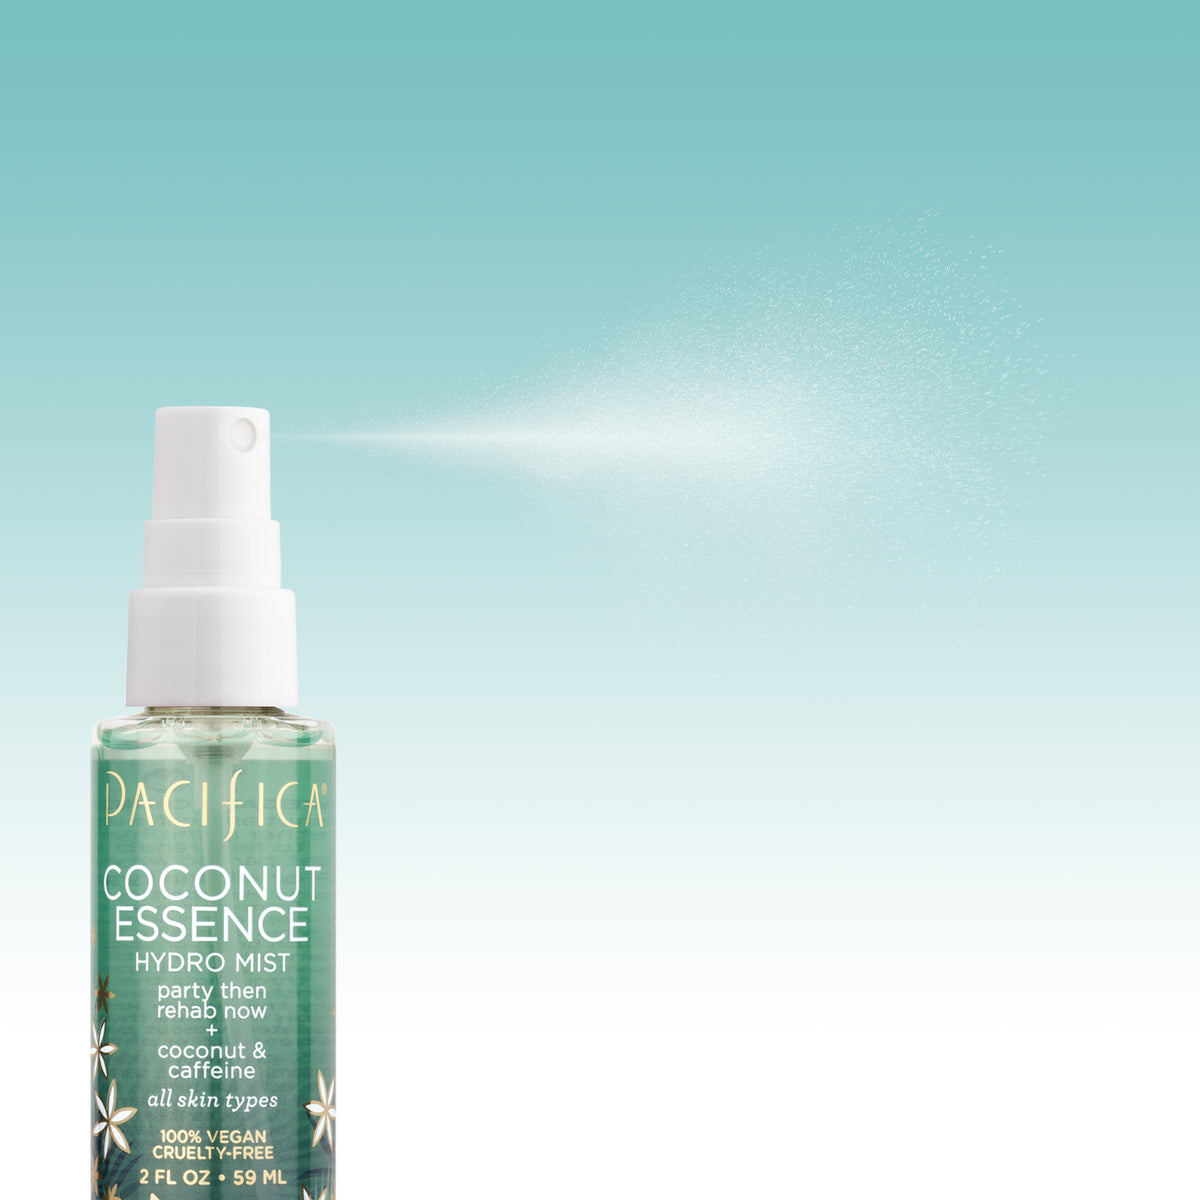 Coconut Essence Hydro Mist TRAVEL SIZE (2 fl oz) - Skin Care - Pacifica Beauty